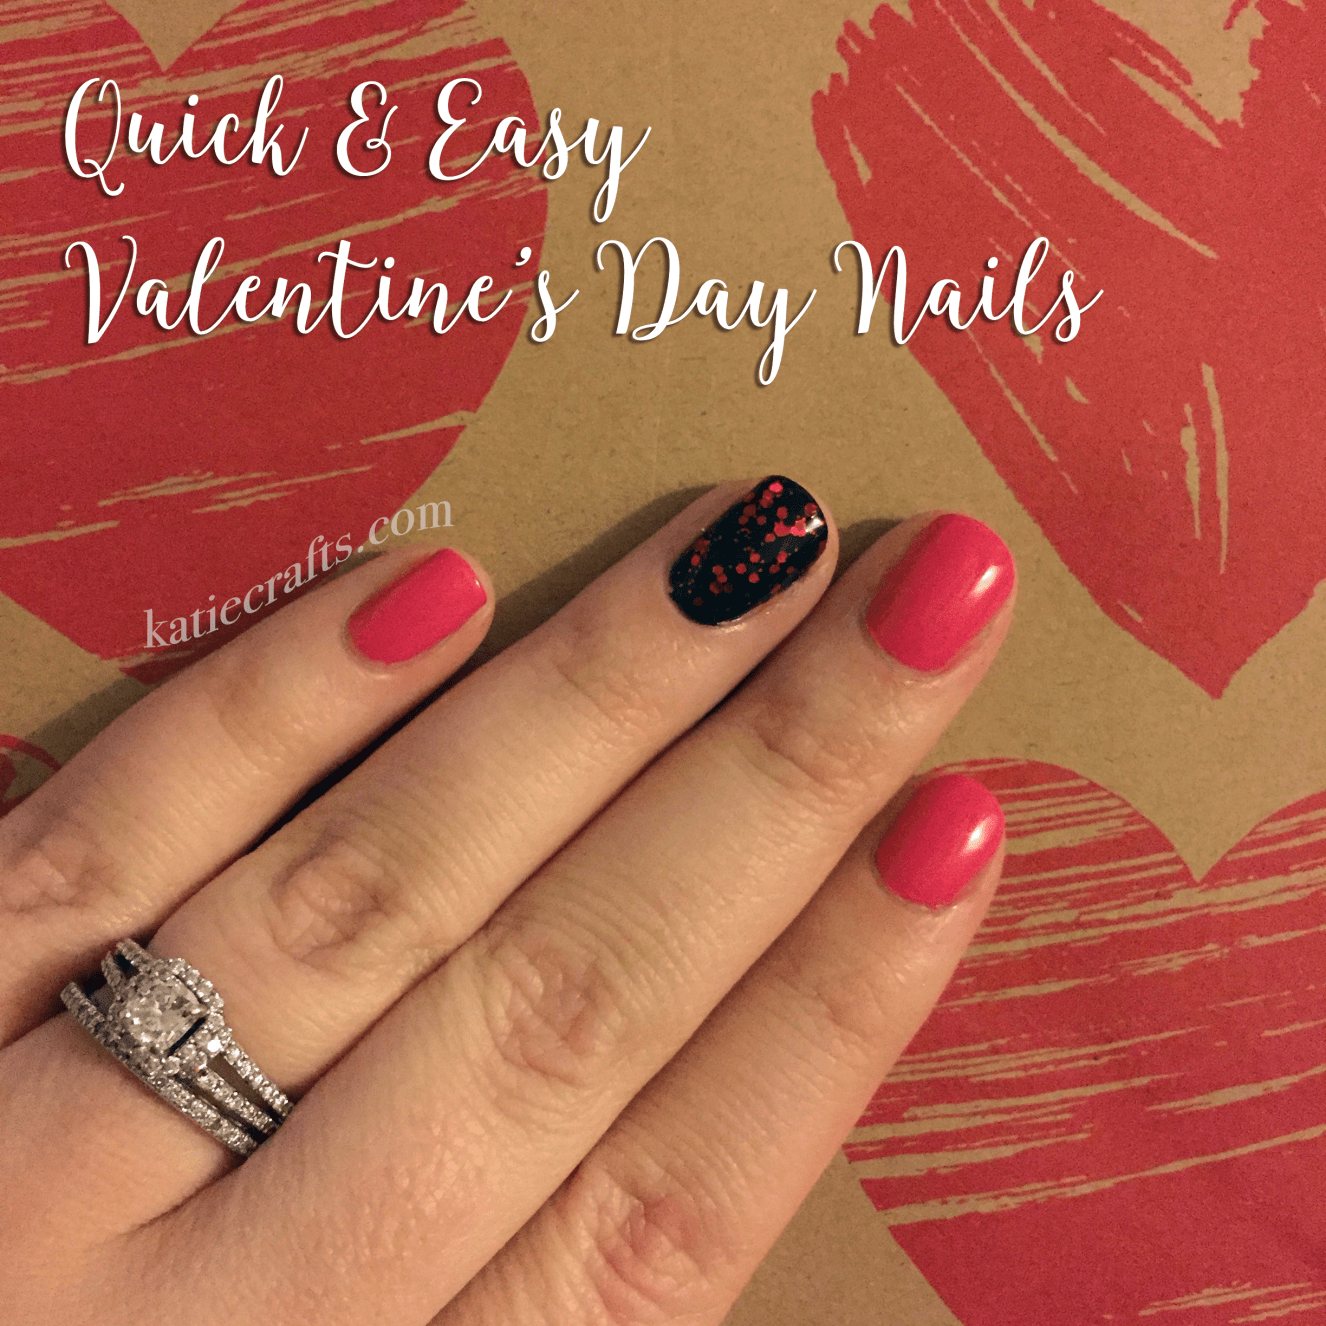 Quick & Easy Valentine's Day Nails on Katie Crafts; https://www.katiecrafts.com